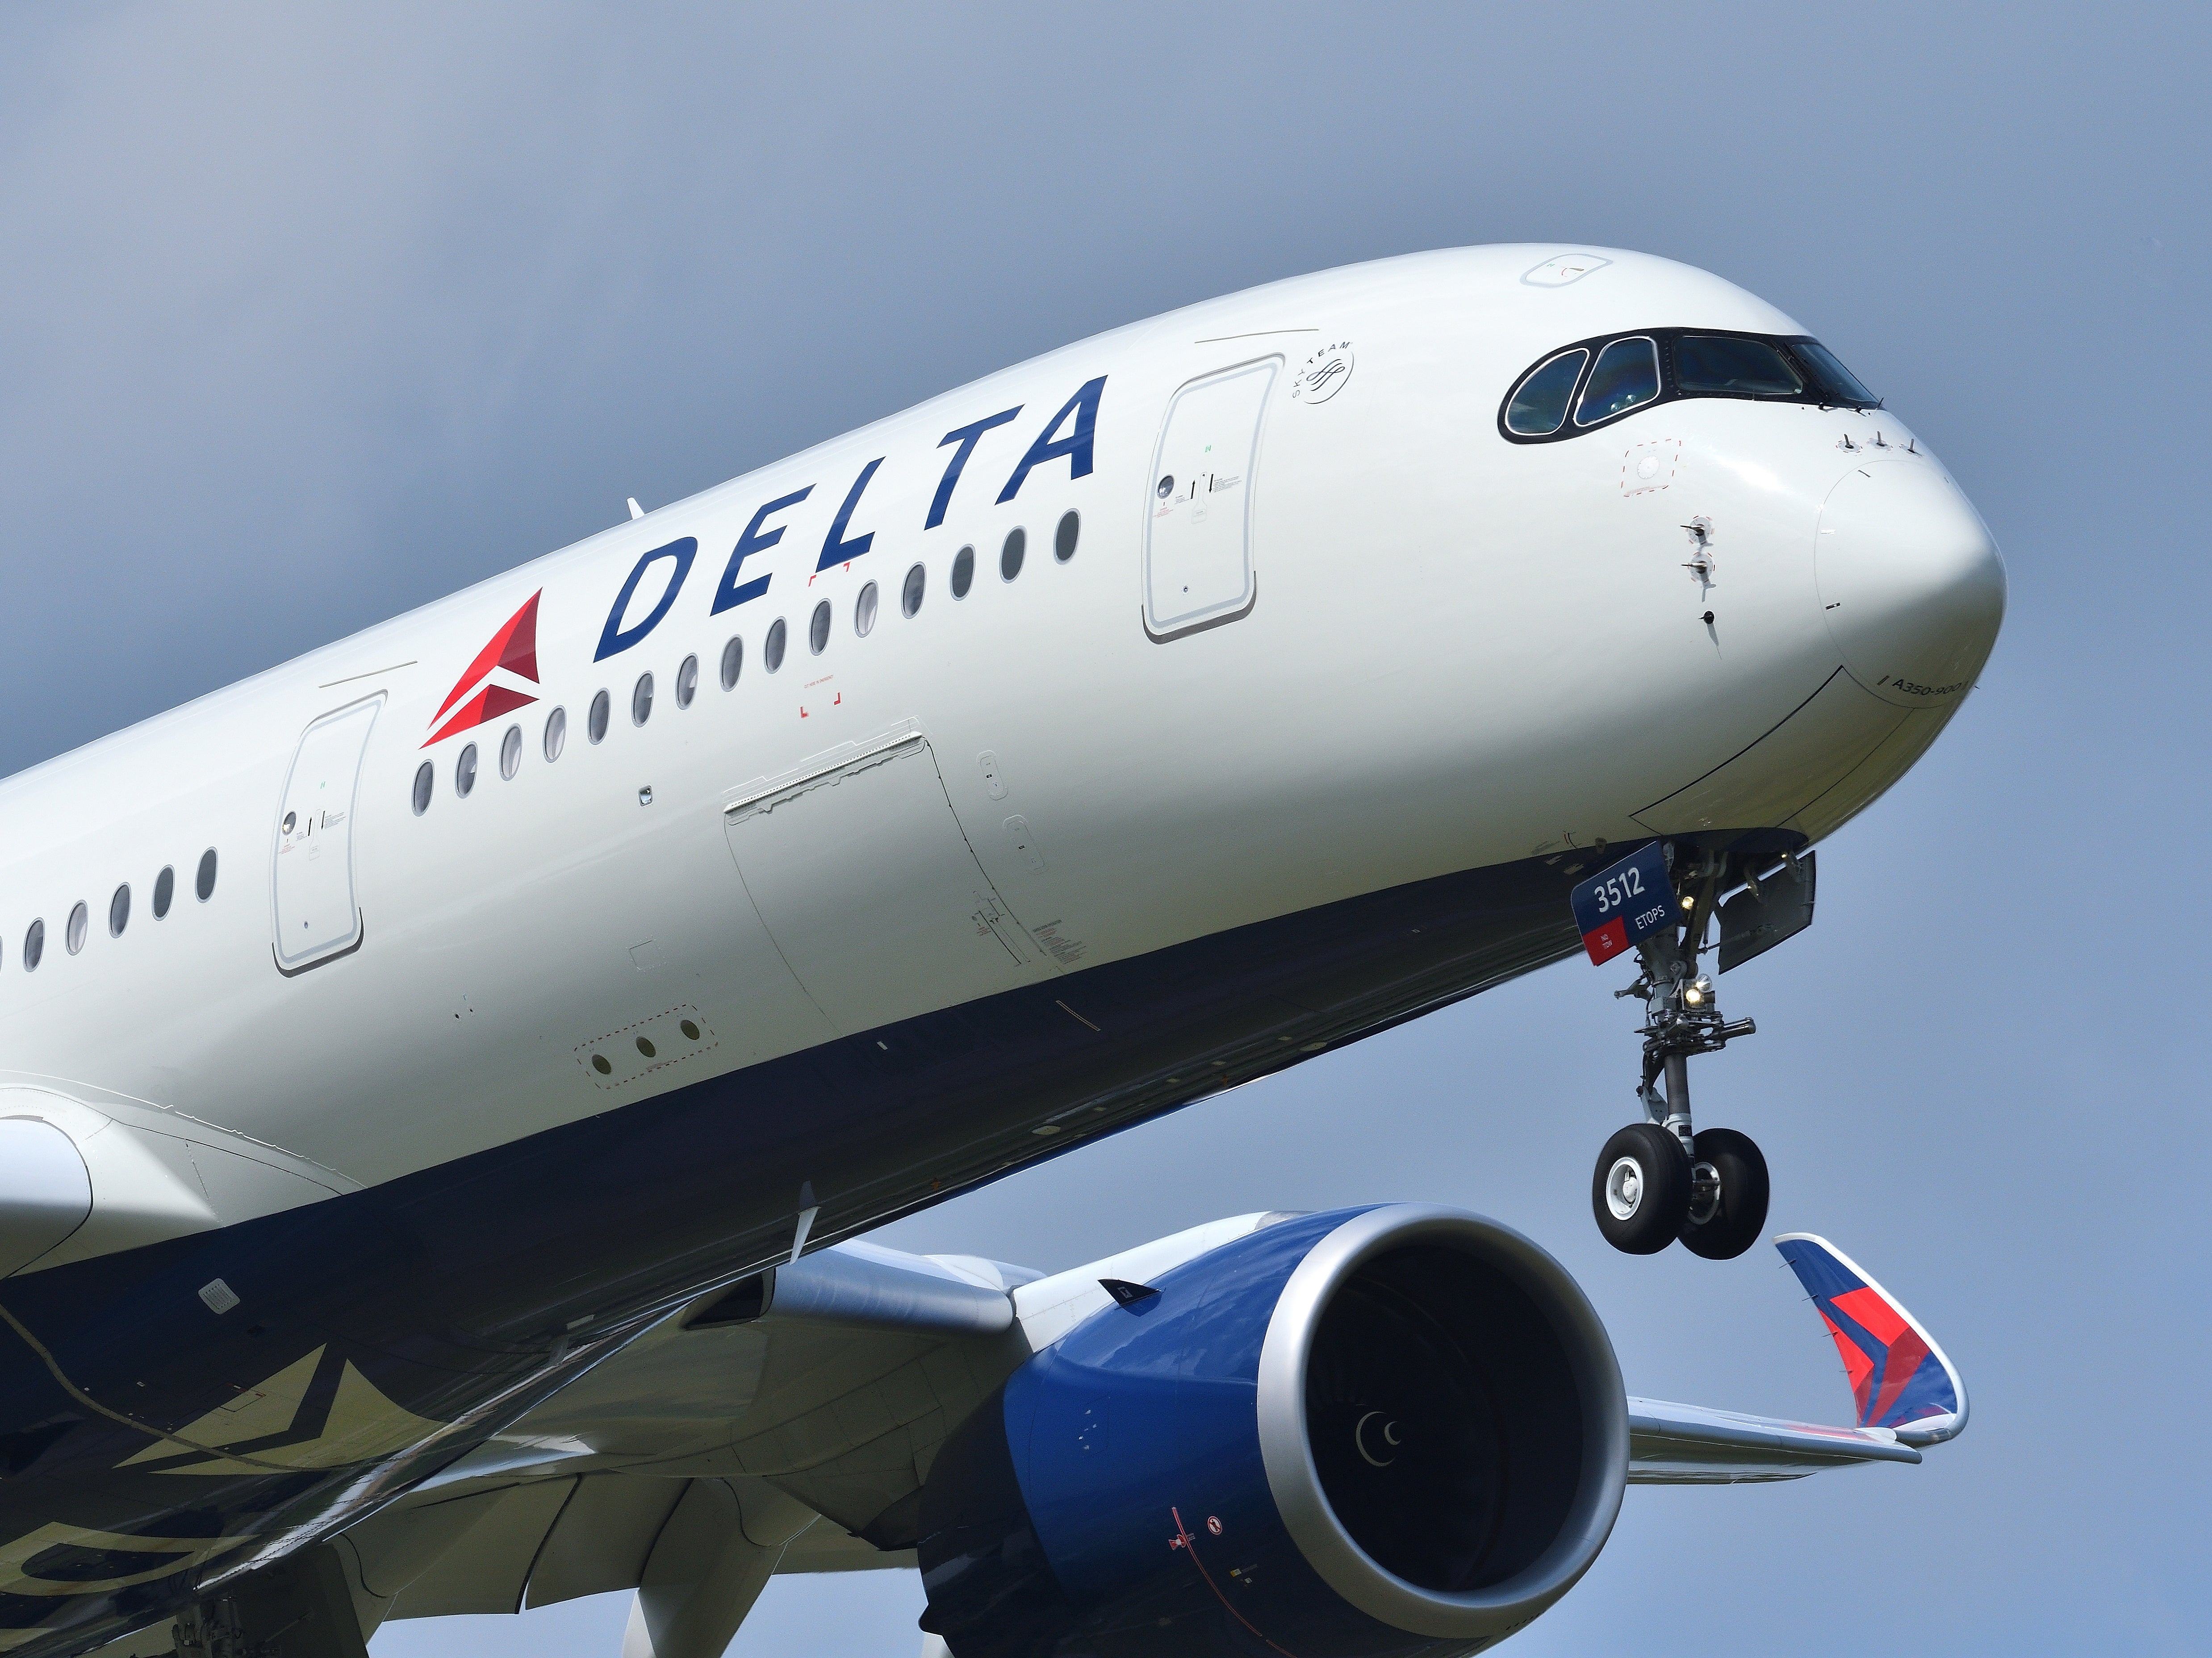 A Delta Airlines flight